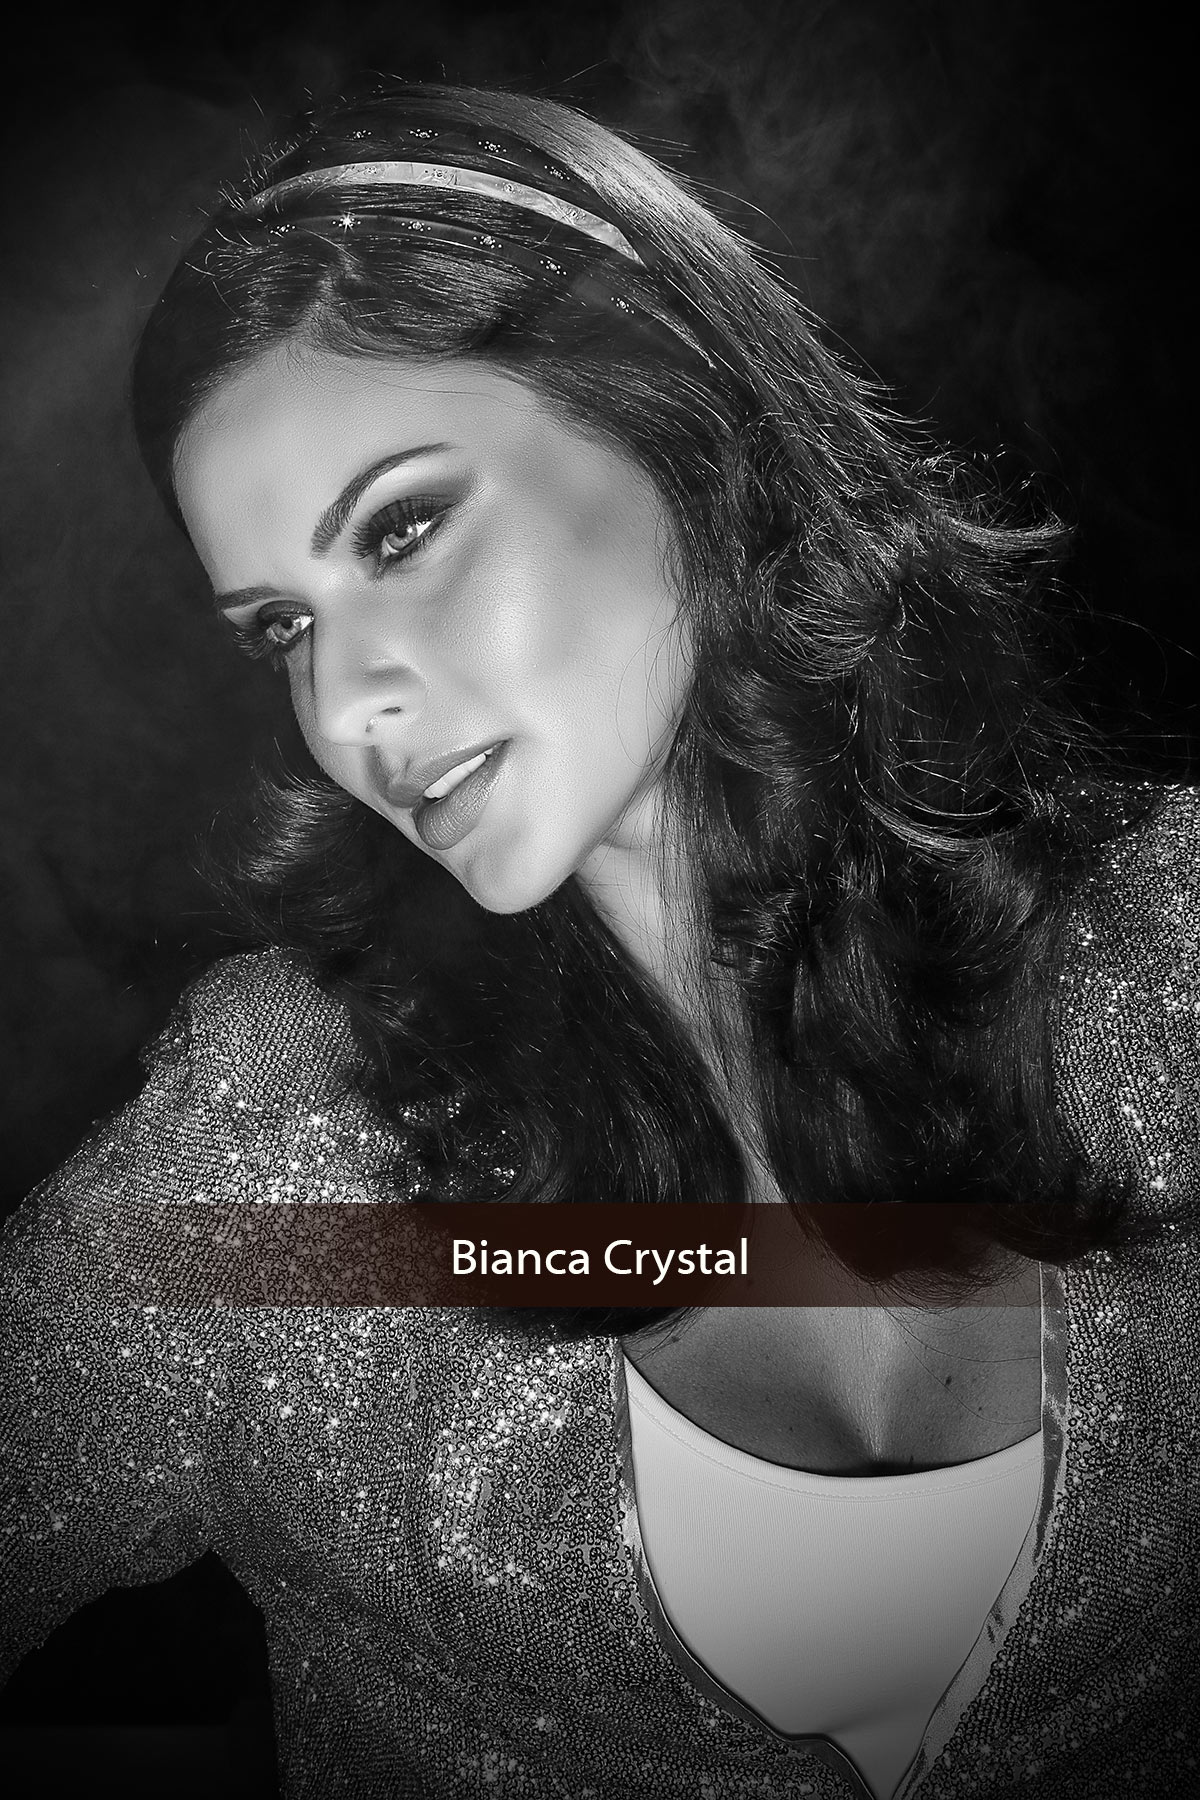 Bianca Crystal